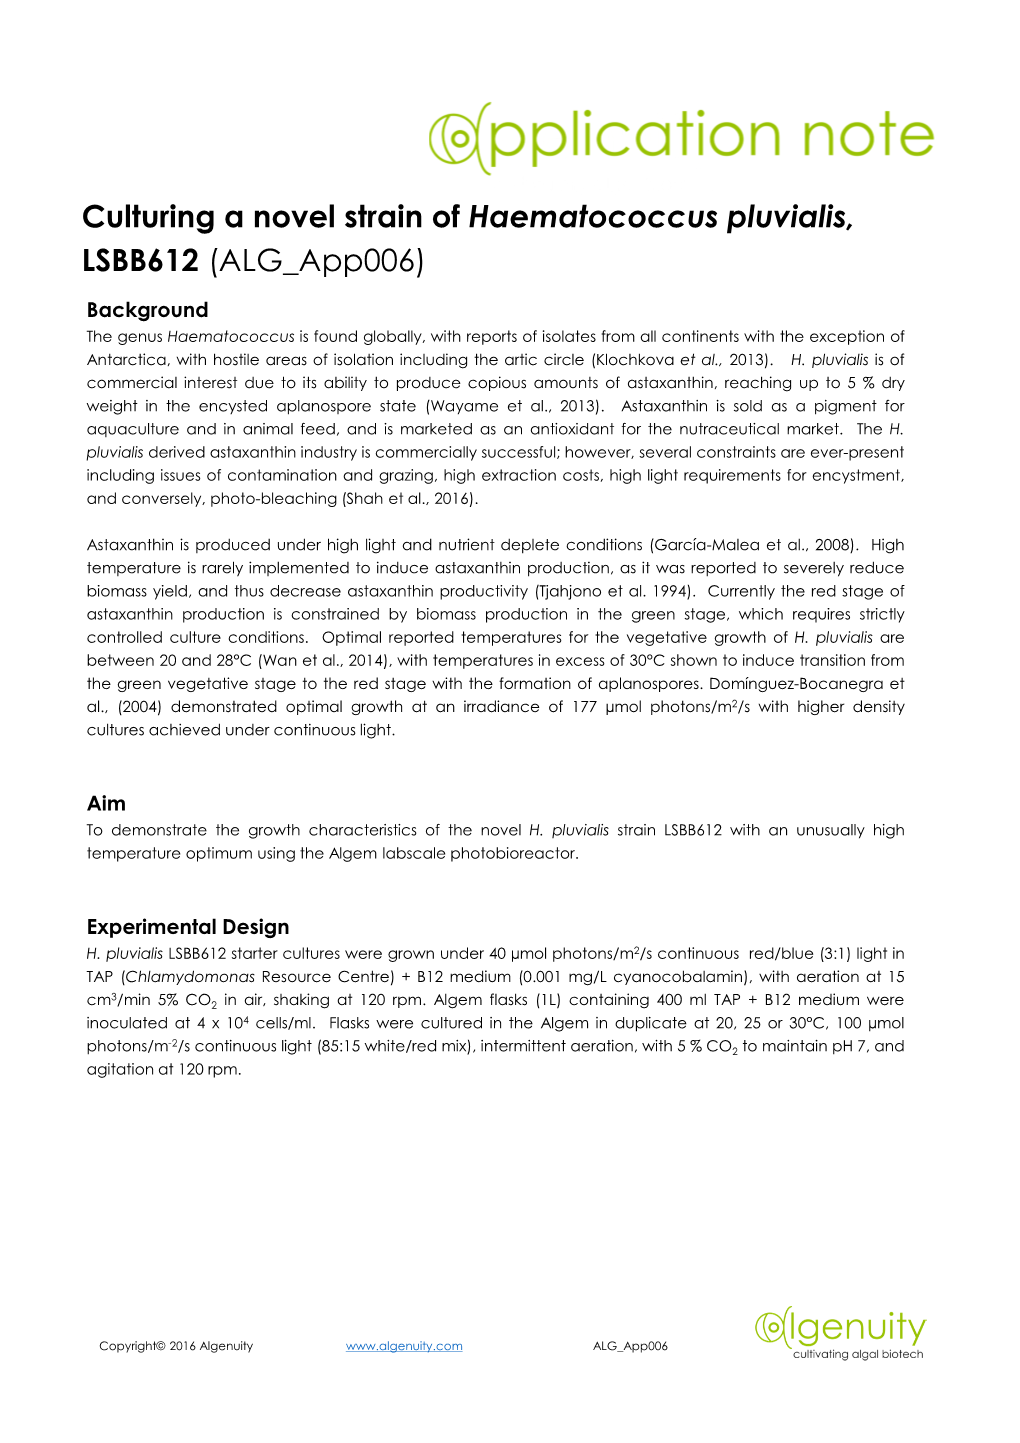 Culturing a Novel Strain of Haematococcus Pluvialis, LSBB612 (ALG App006)